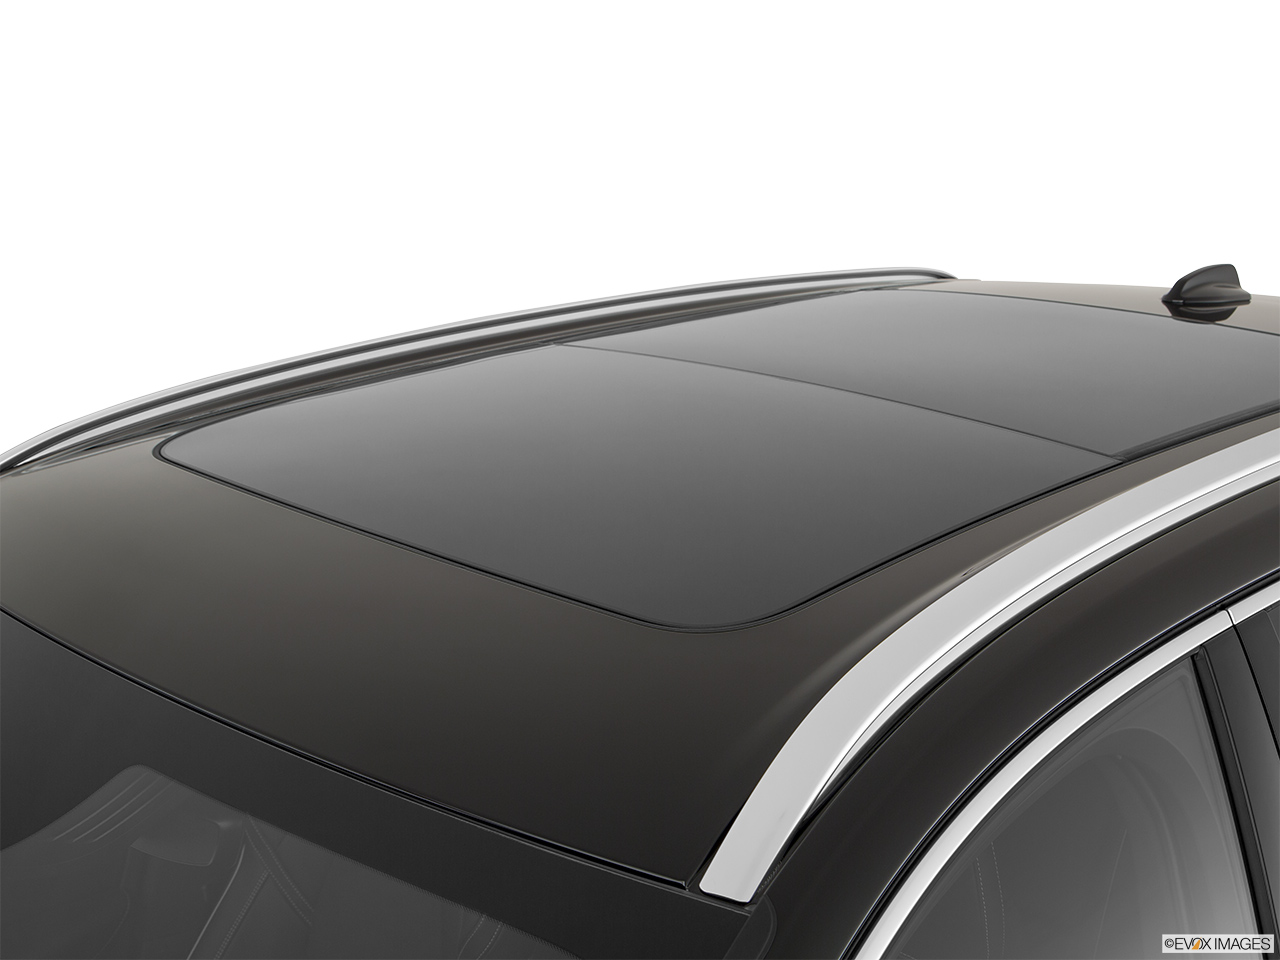 2019 Volvo XC60 T8 R-Design eAWD Plug-in Hybrid Sunroof/moonroof. 